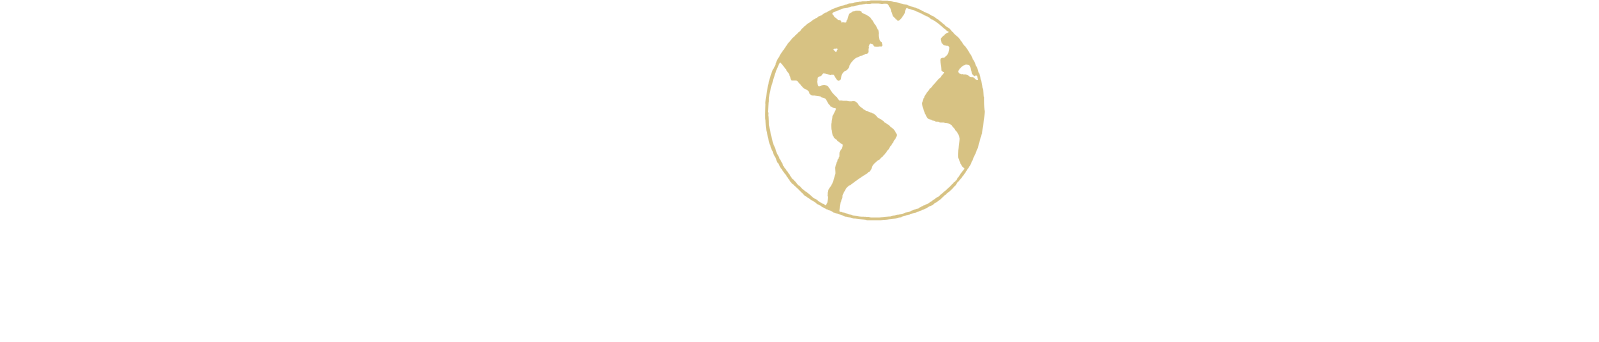 Seaboard Logo groß für dunkle Hintergründe (transparentes PNG)